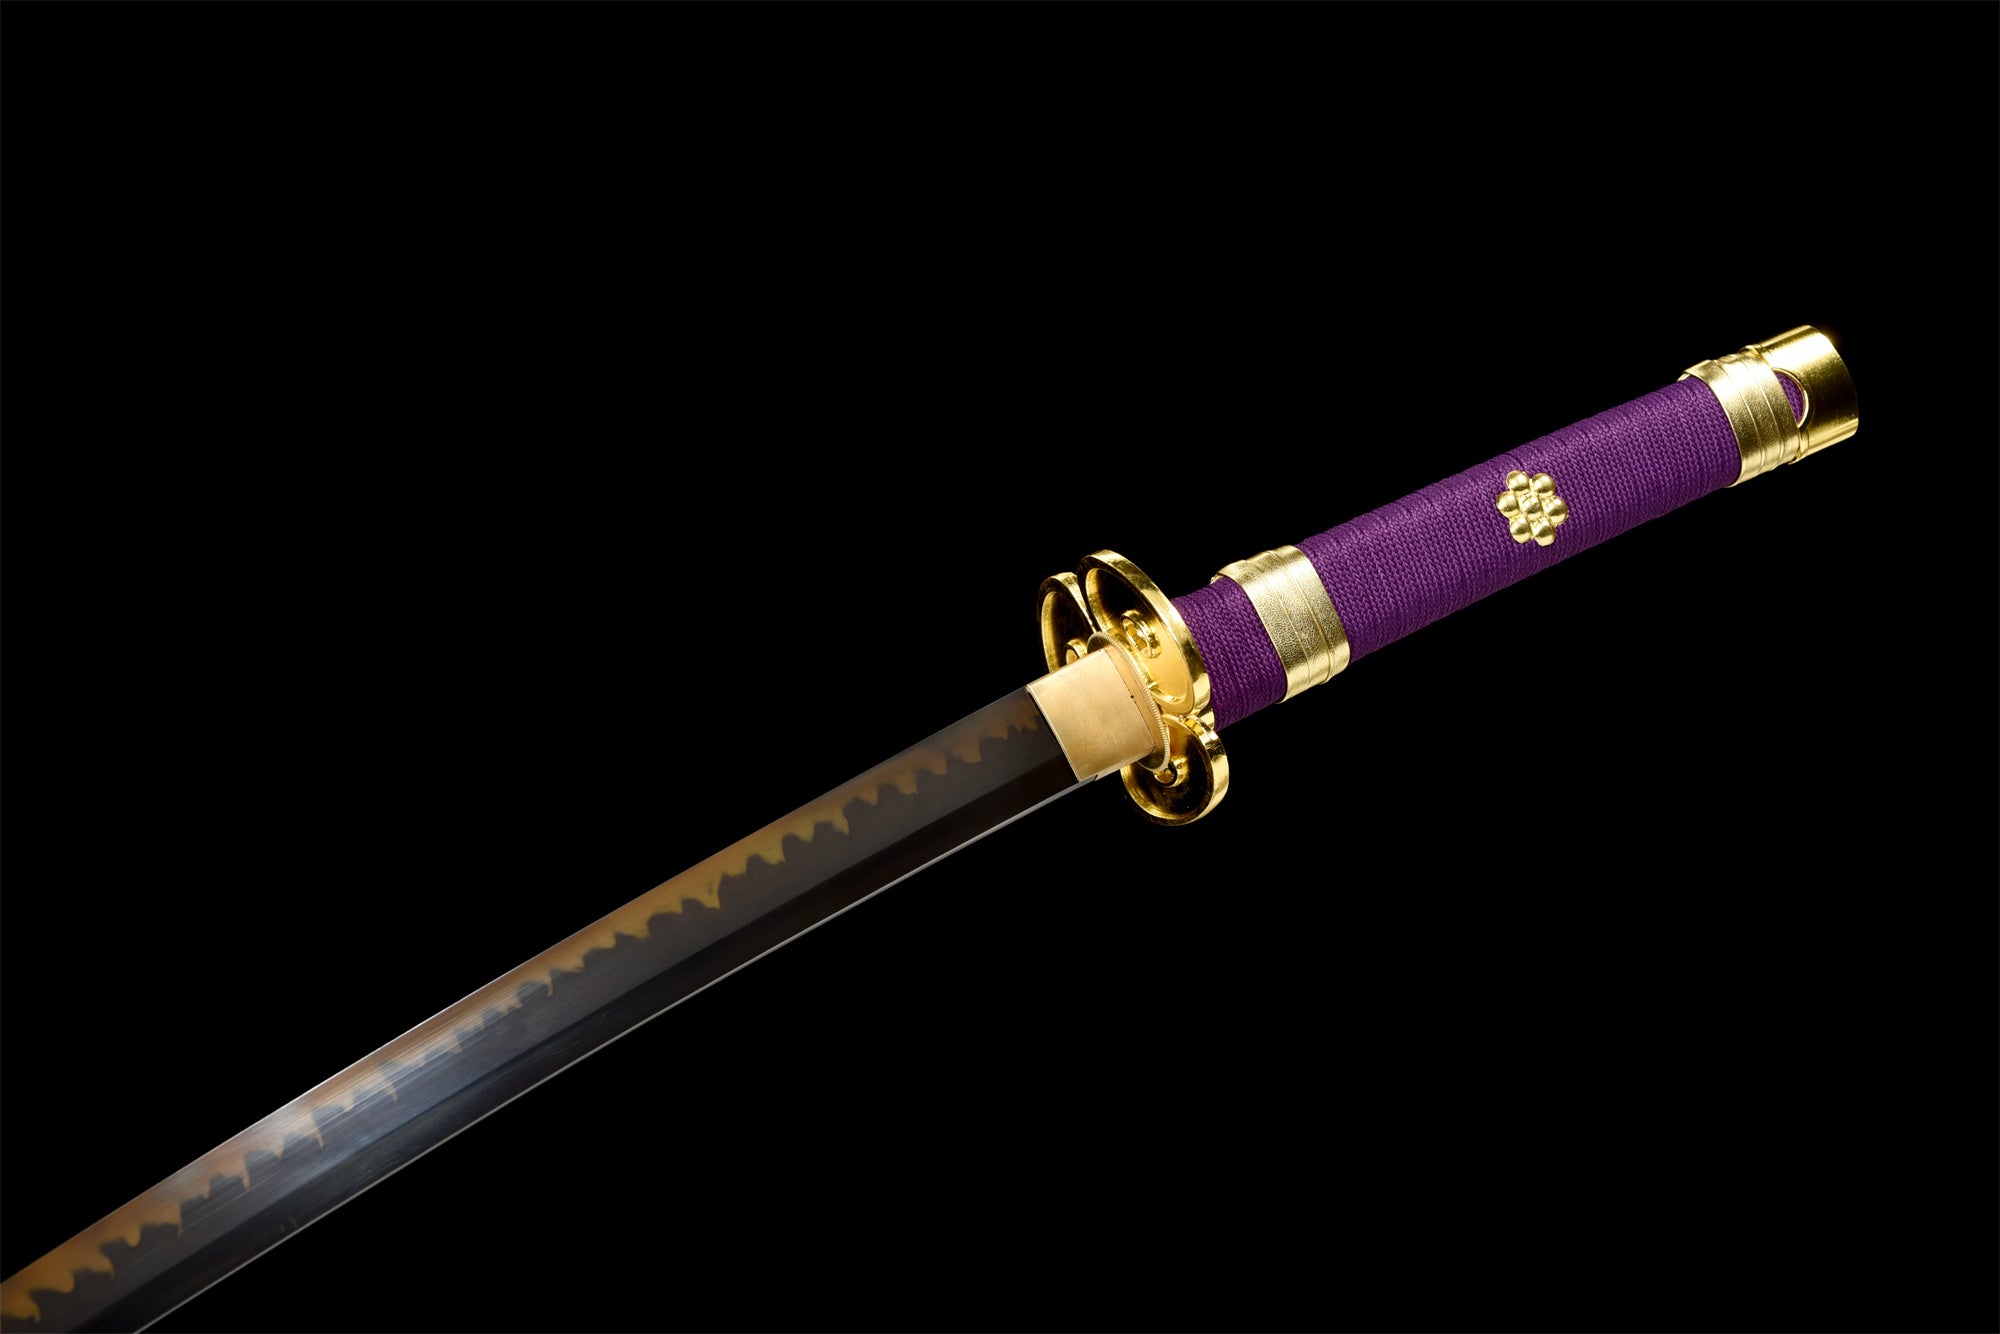 BLEACH ICHIGO BANKAI SWORD Handmade Tensa zangetsu Anime Katana Sword  JW-0517 | eBay